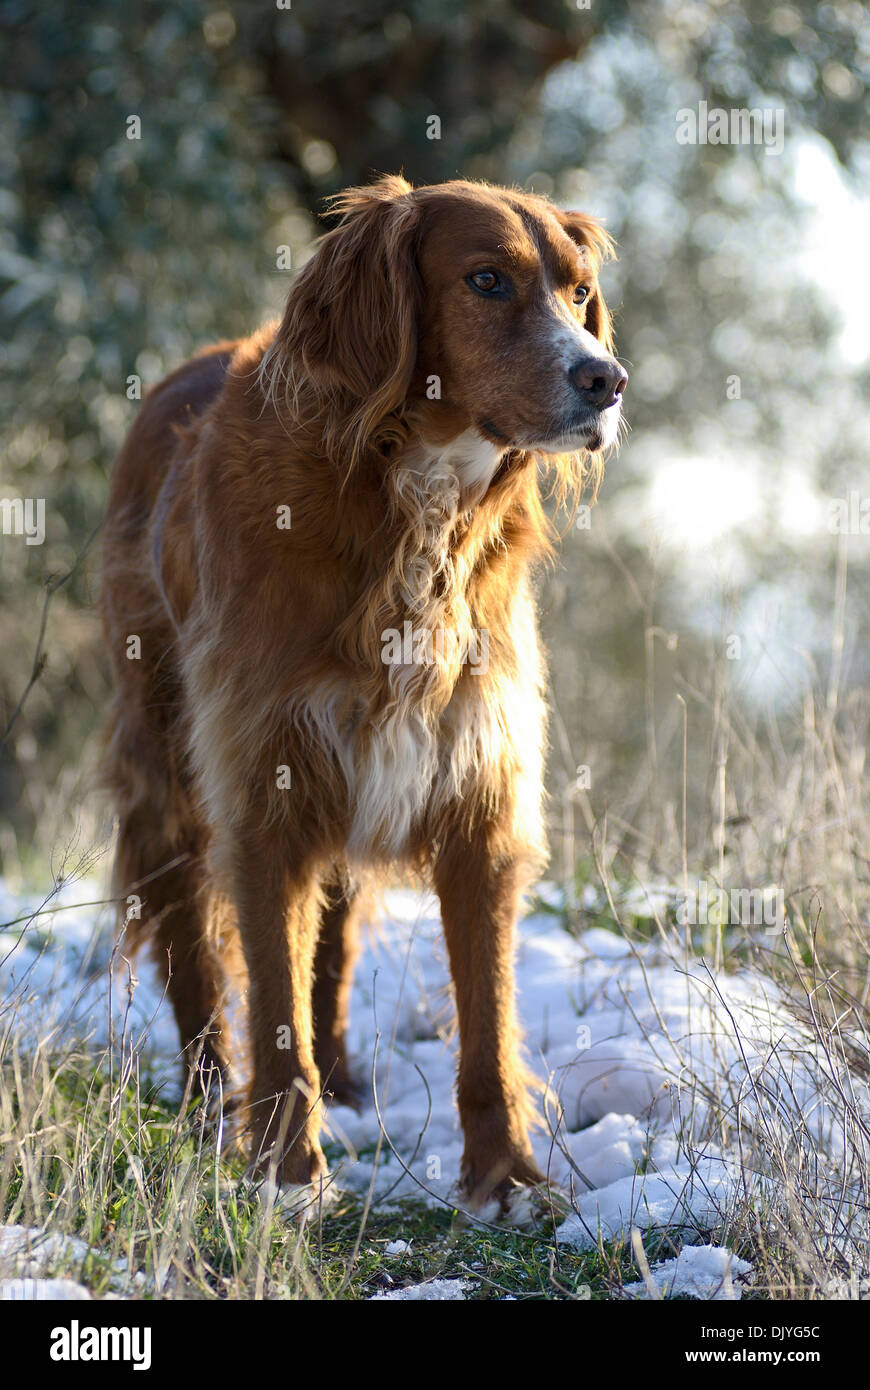 Irish Setter standing in snowy field Stock Photo